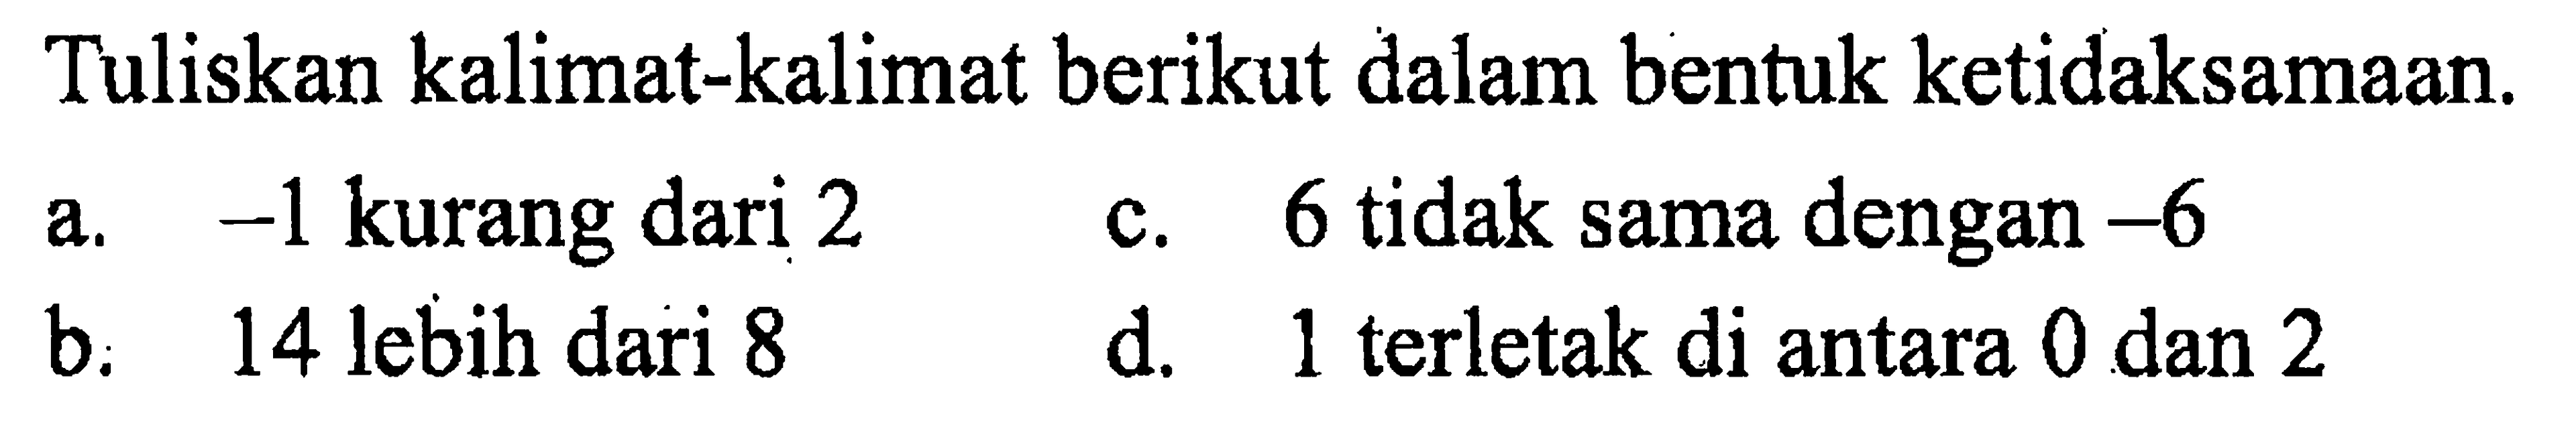 Tuliskan kalimat-kalimat berikut dalam bentuk ketidaksamaan. a. -1 kurang dari 2 c. 6 tidak sama dengan -6 b. 14 lebih dari 8 d. 1 terletak di antara 0 dan 2